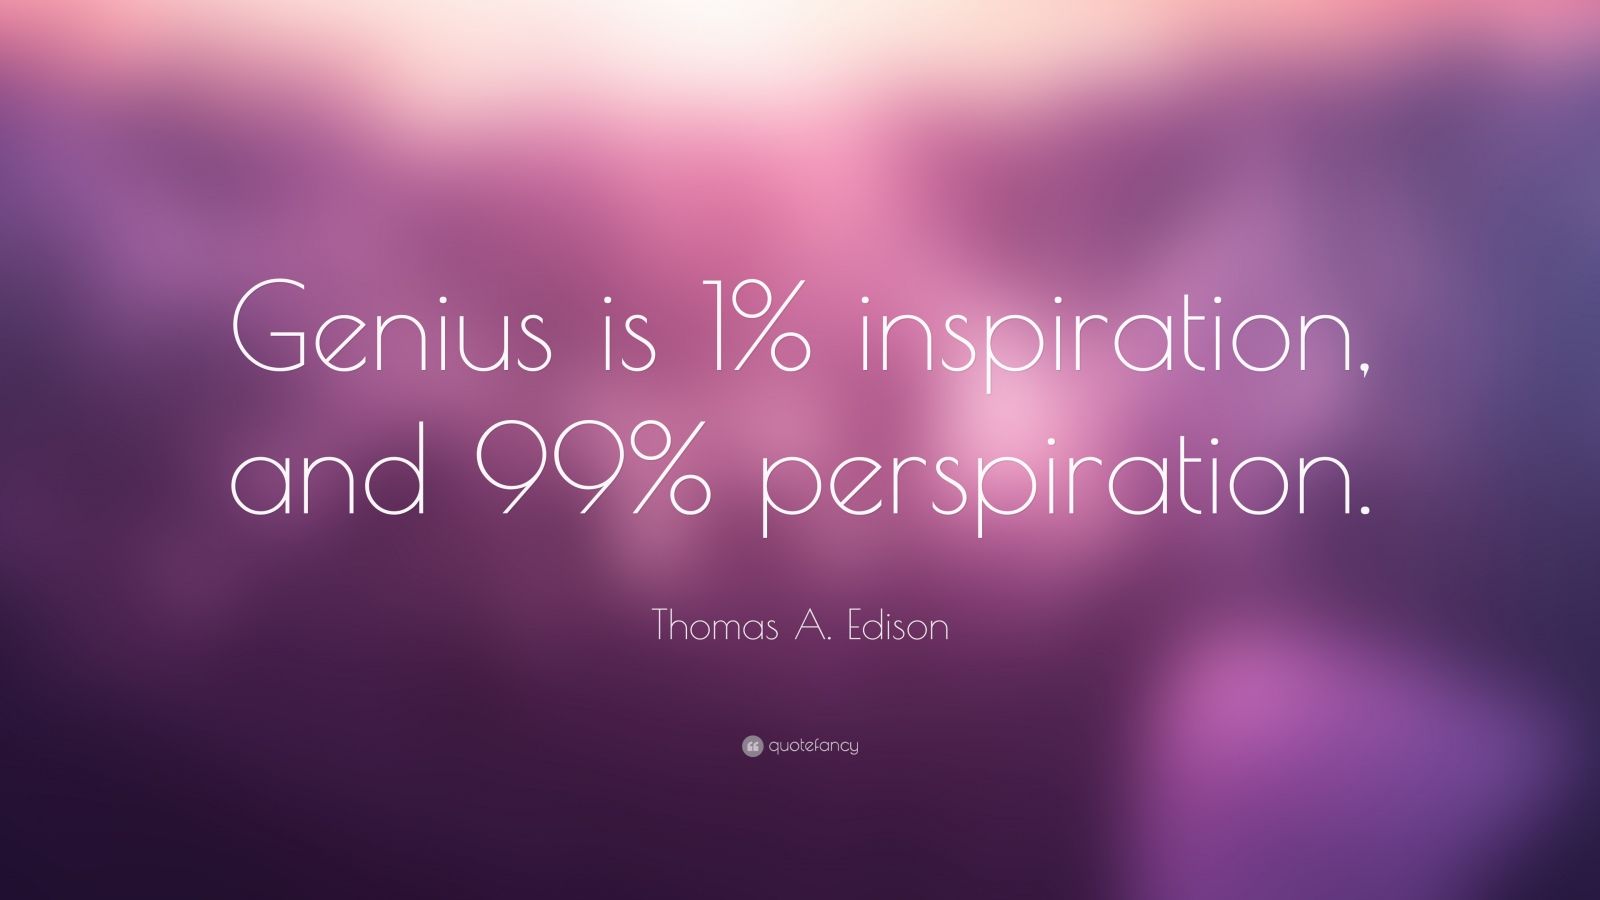 Thomas A. Edison Quote: 